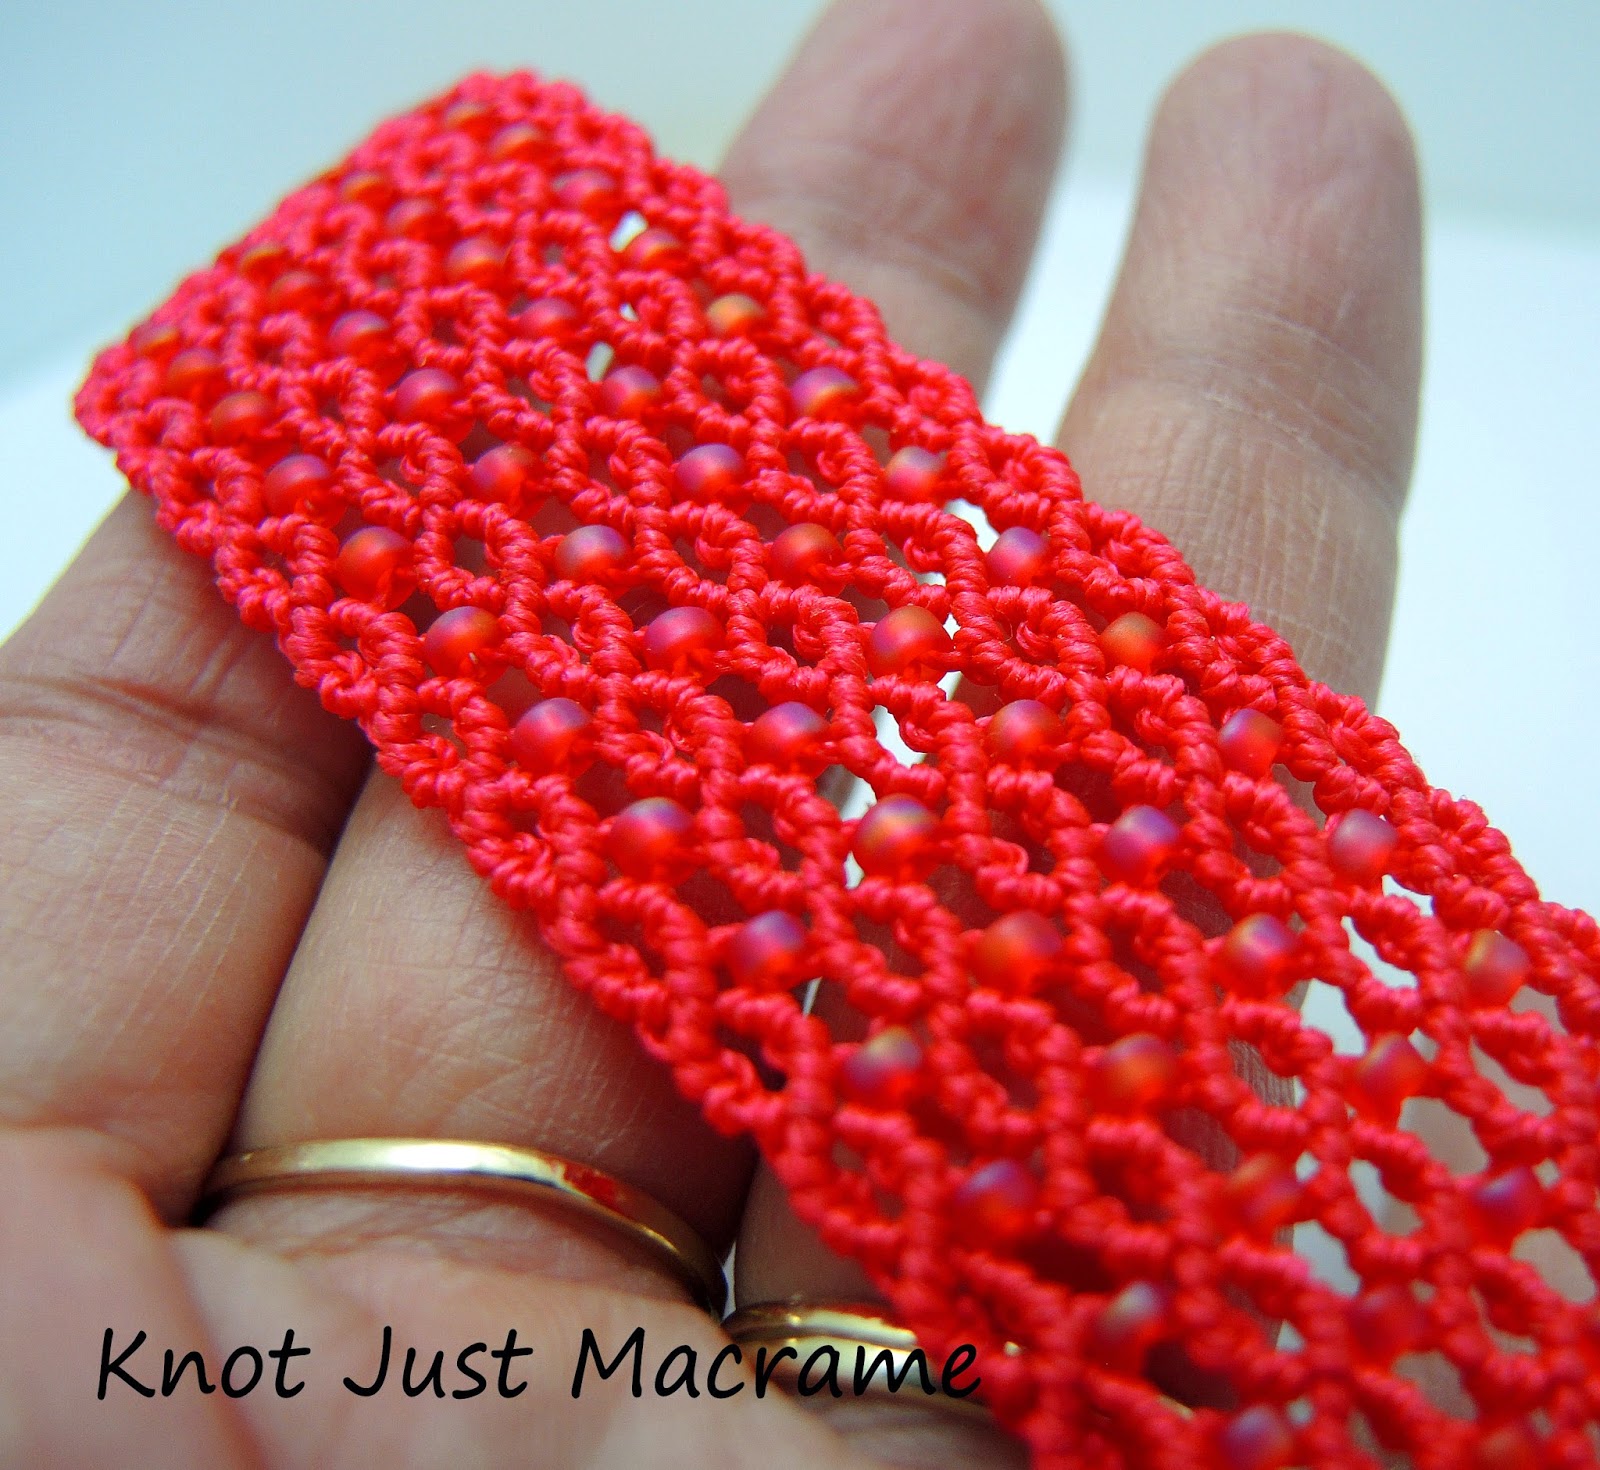 Close up of macrame knotting by Sherri Stokey of Knot Just Macrame.